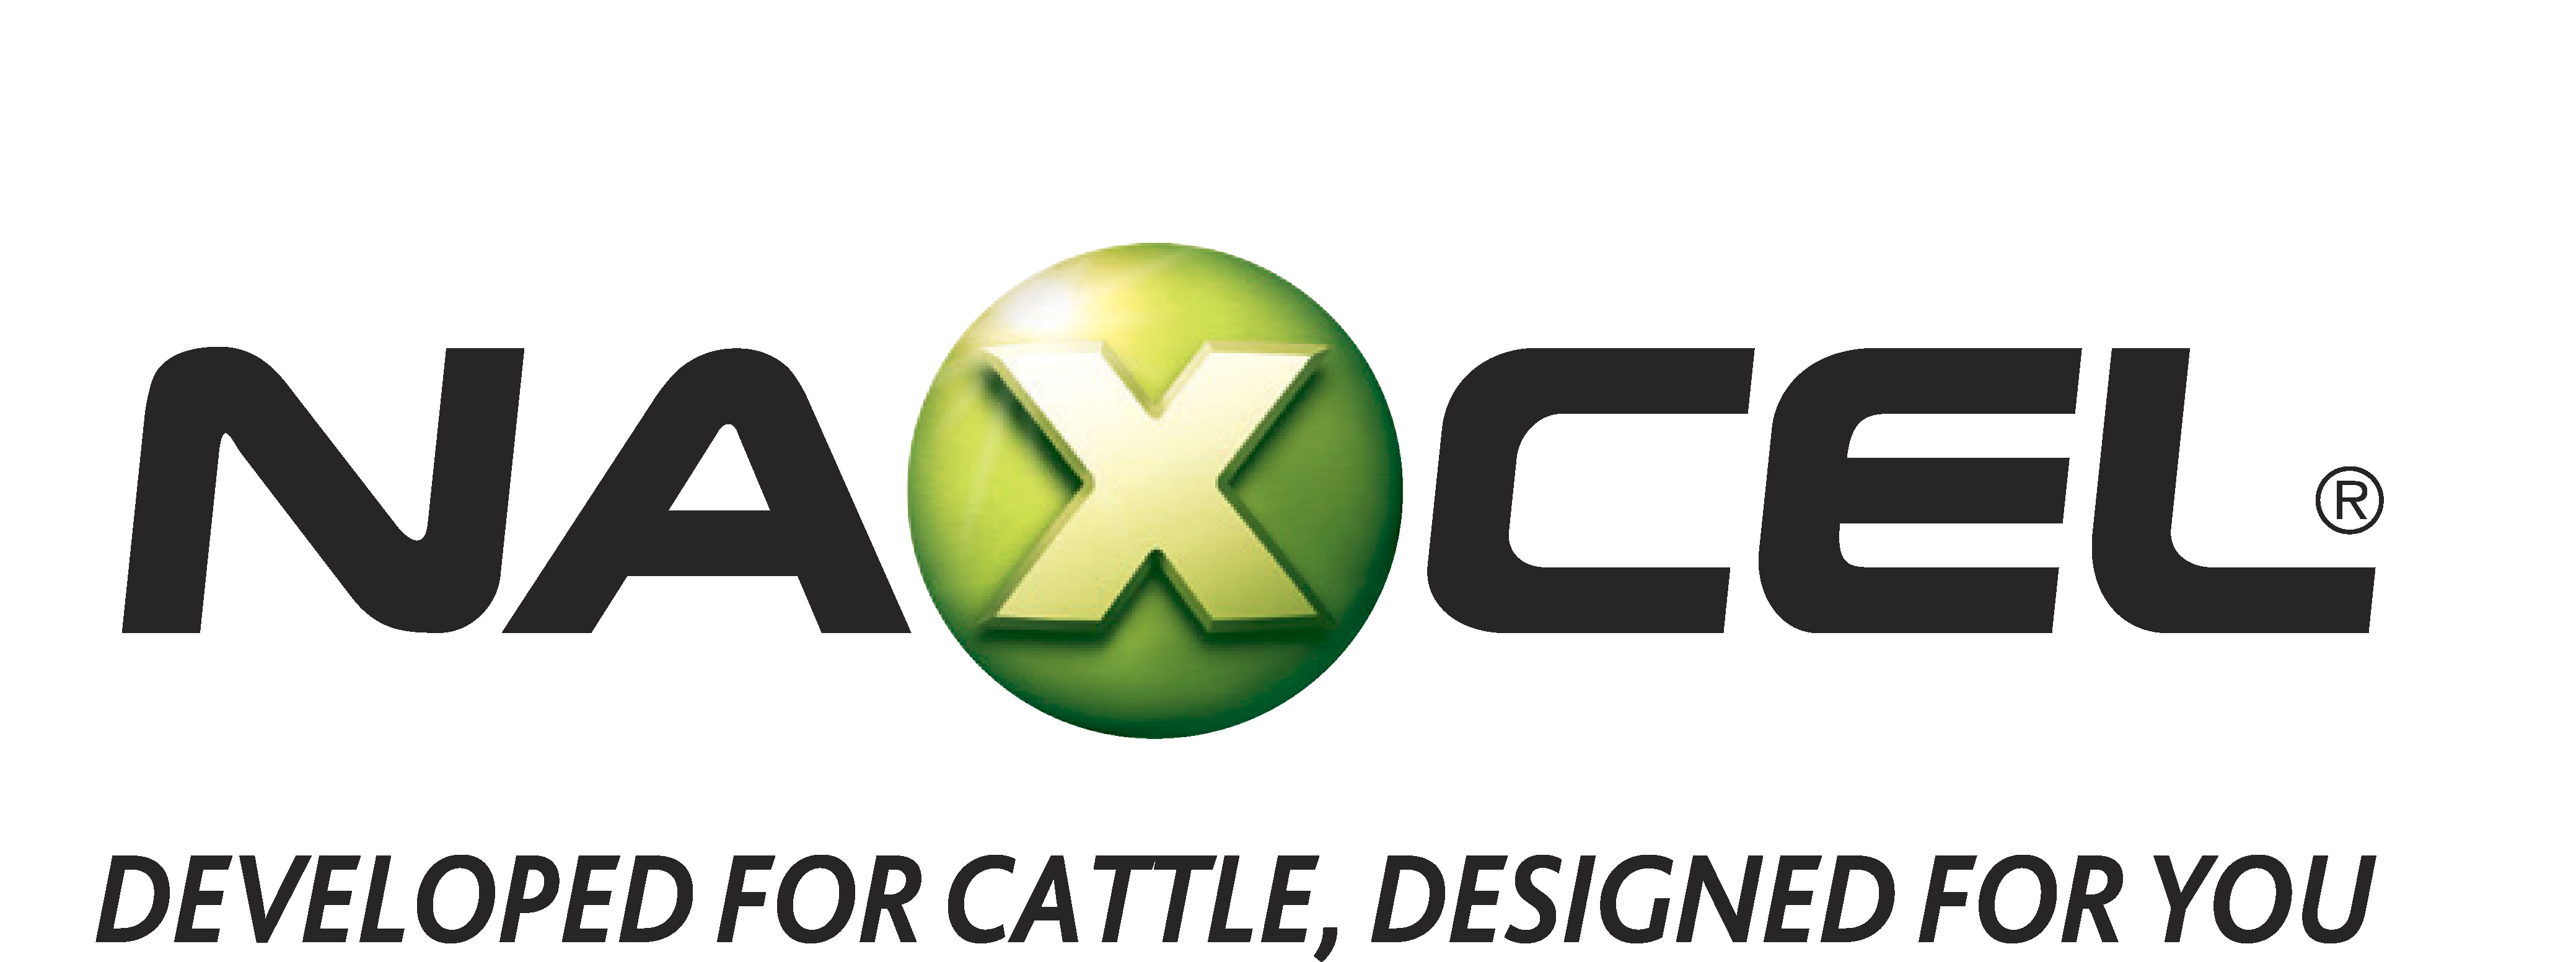 Naxcel logo